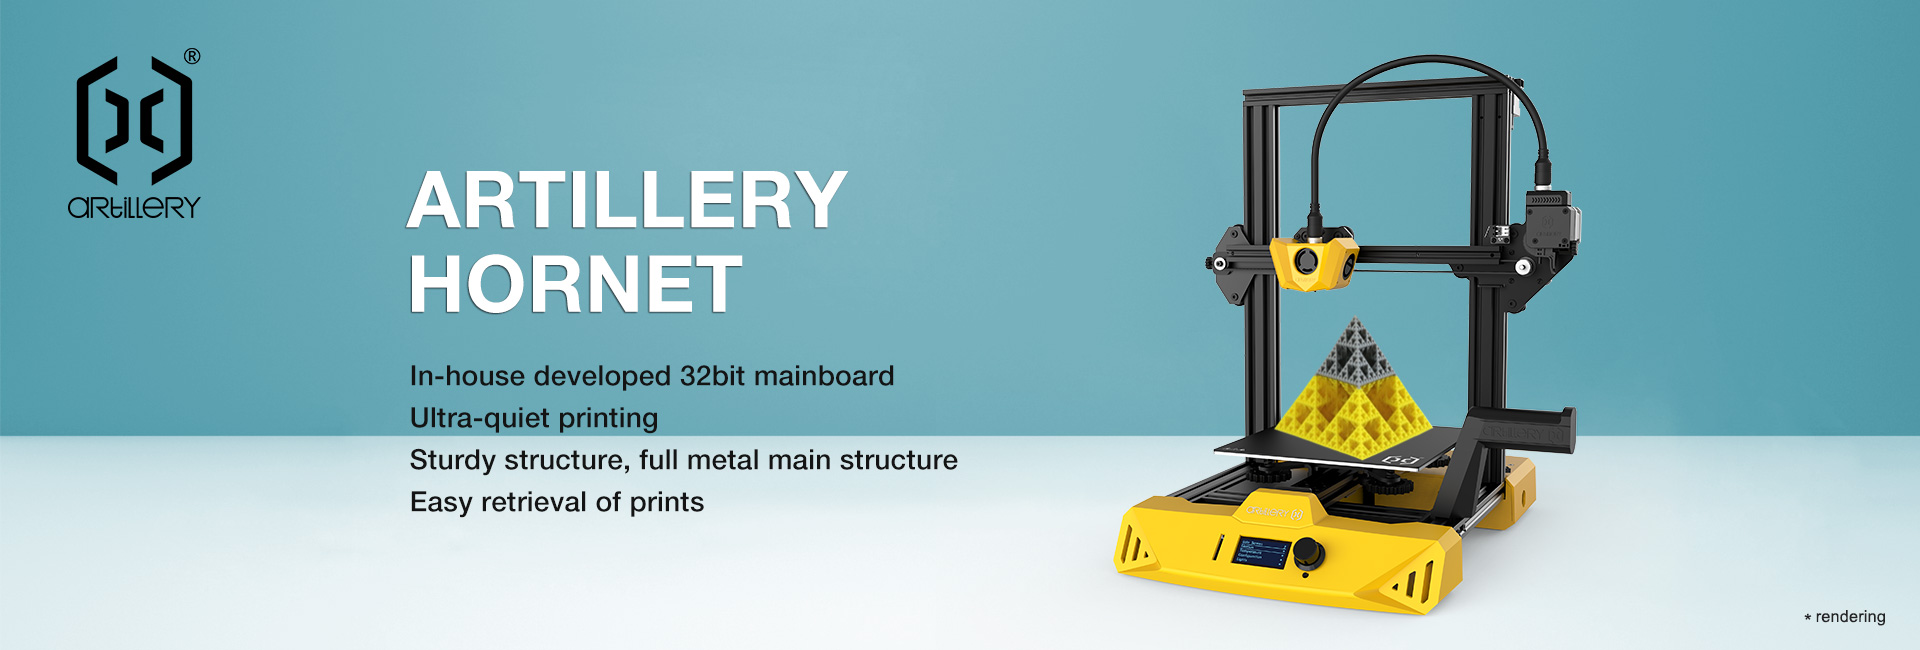 Artillery®Hornet 3D Printer Kit 220x220x250mm Build Volume Support Ultra Quiet Printing In House developed 32Bit Mainboard